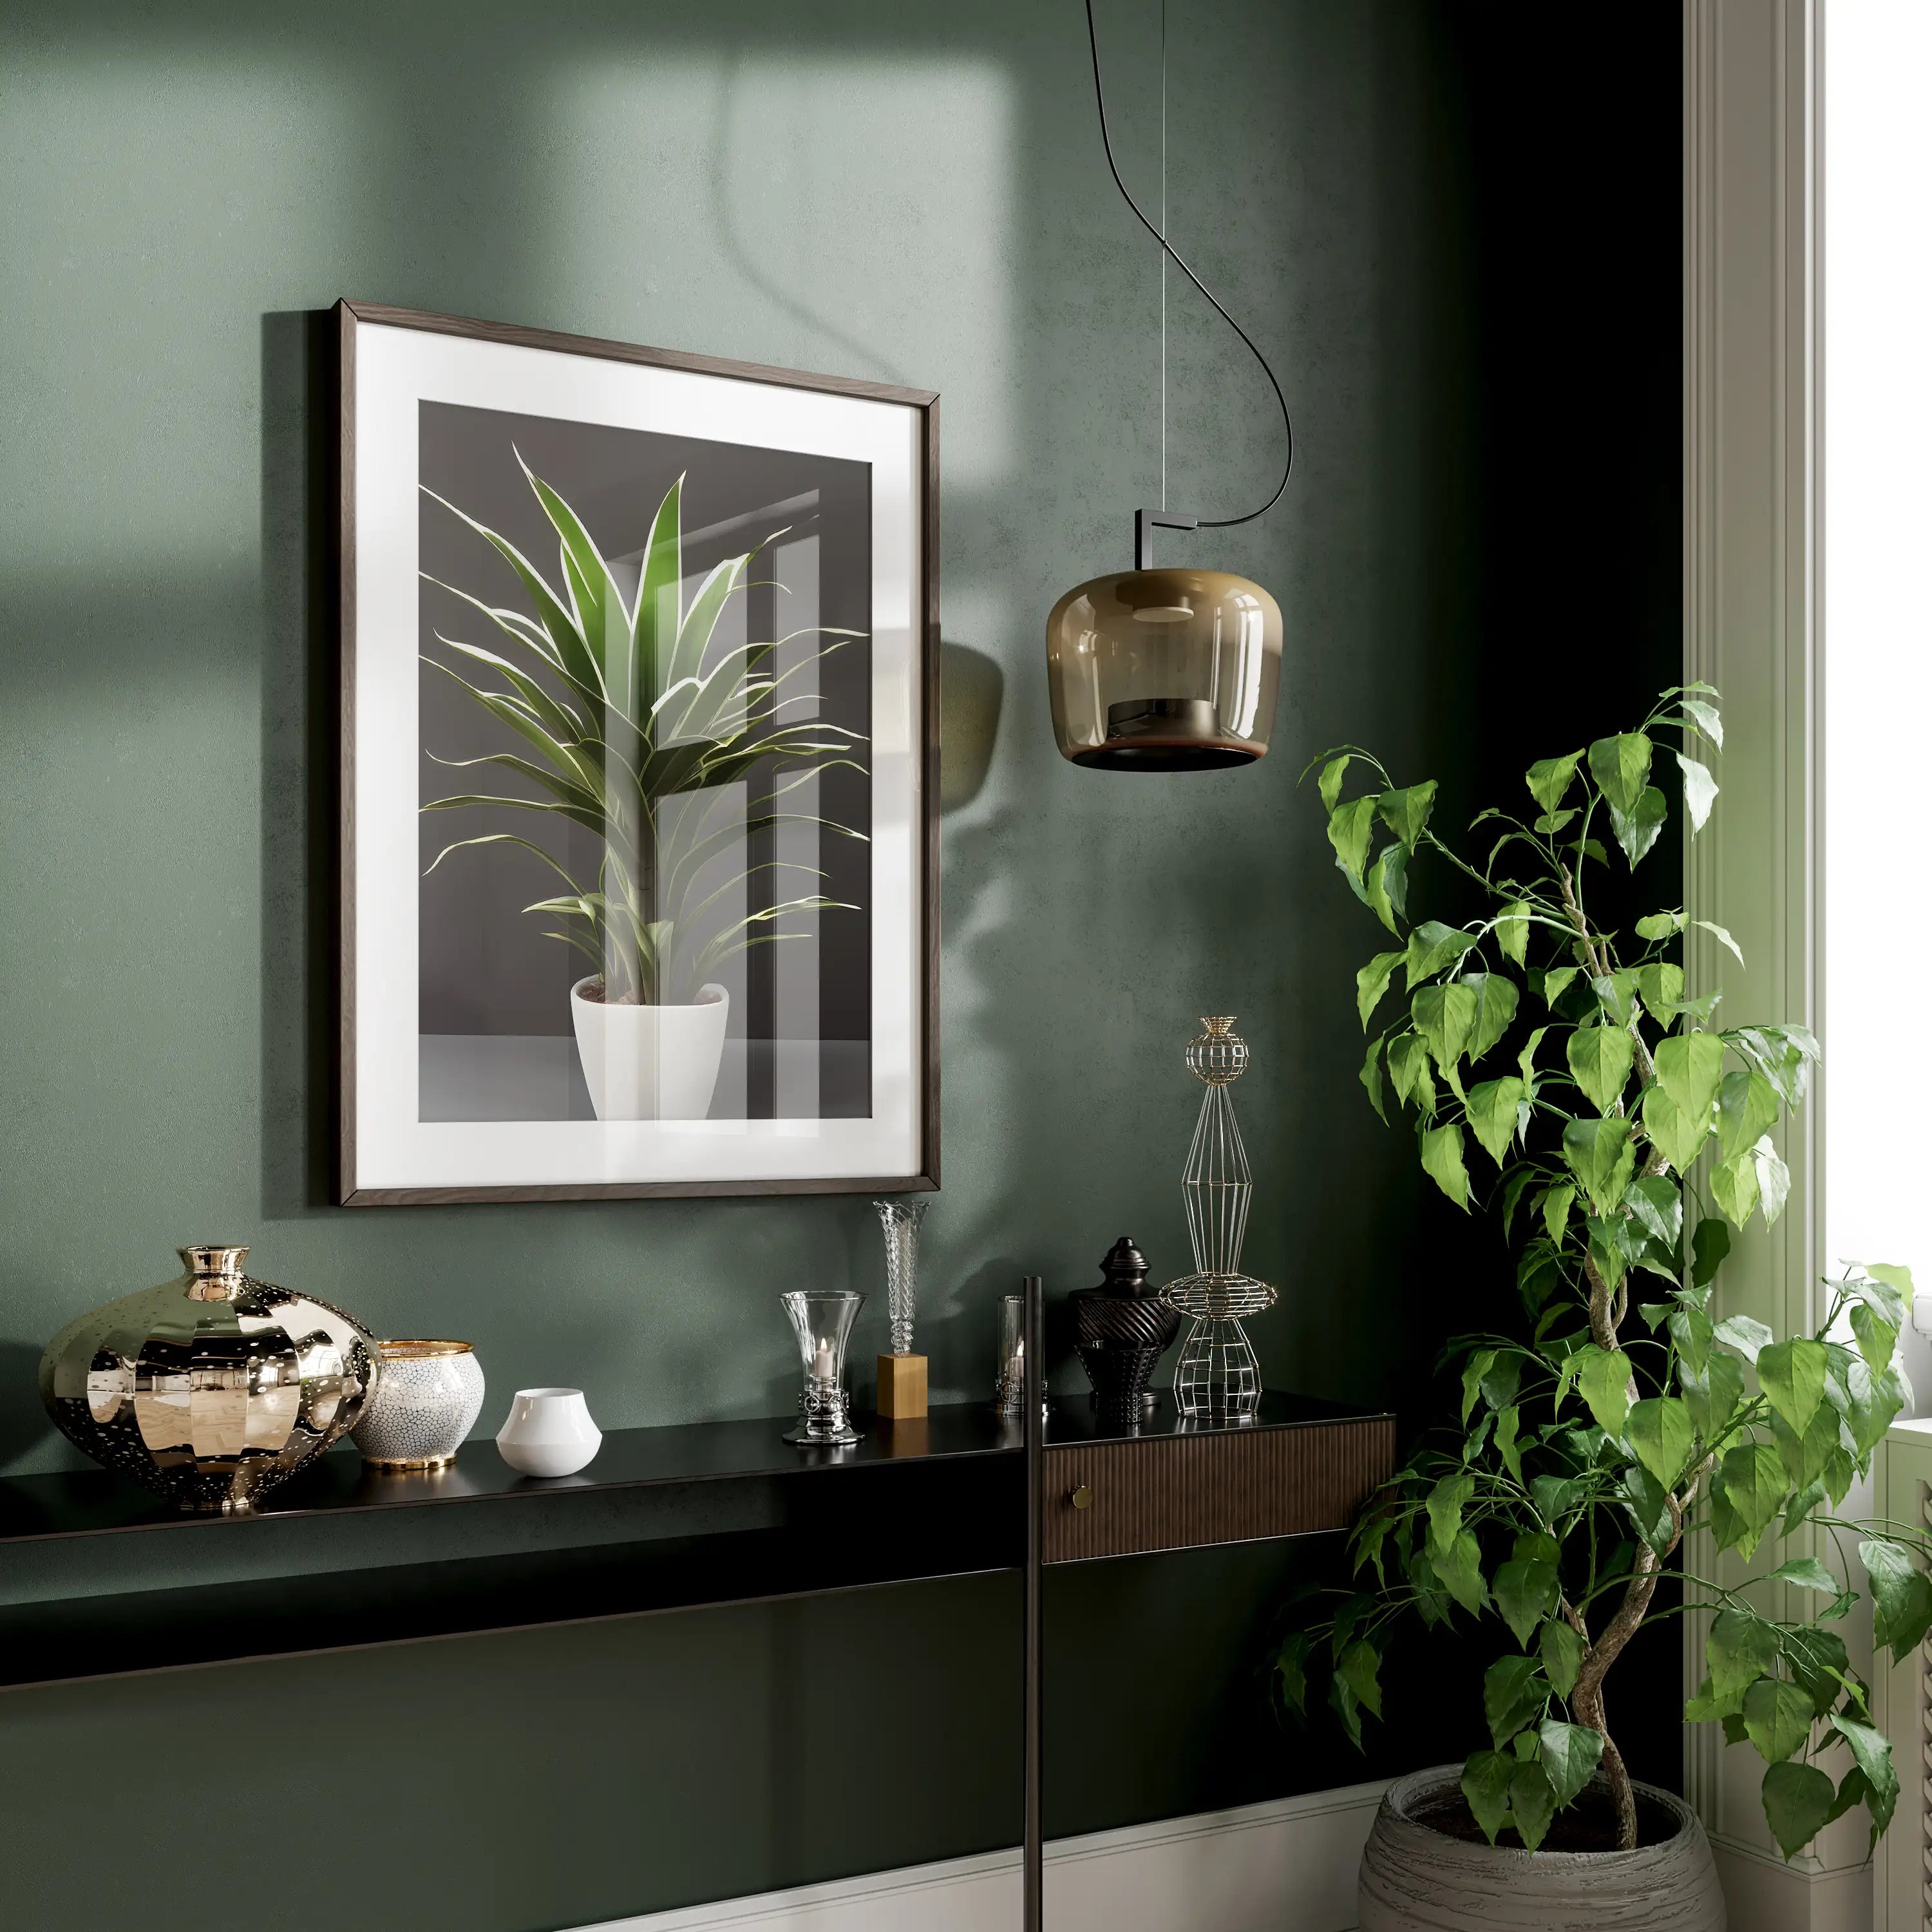 Dracaena trifasciata - Plants No 1 - Poster